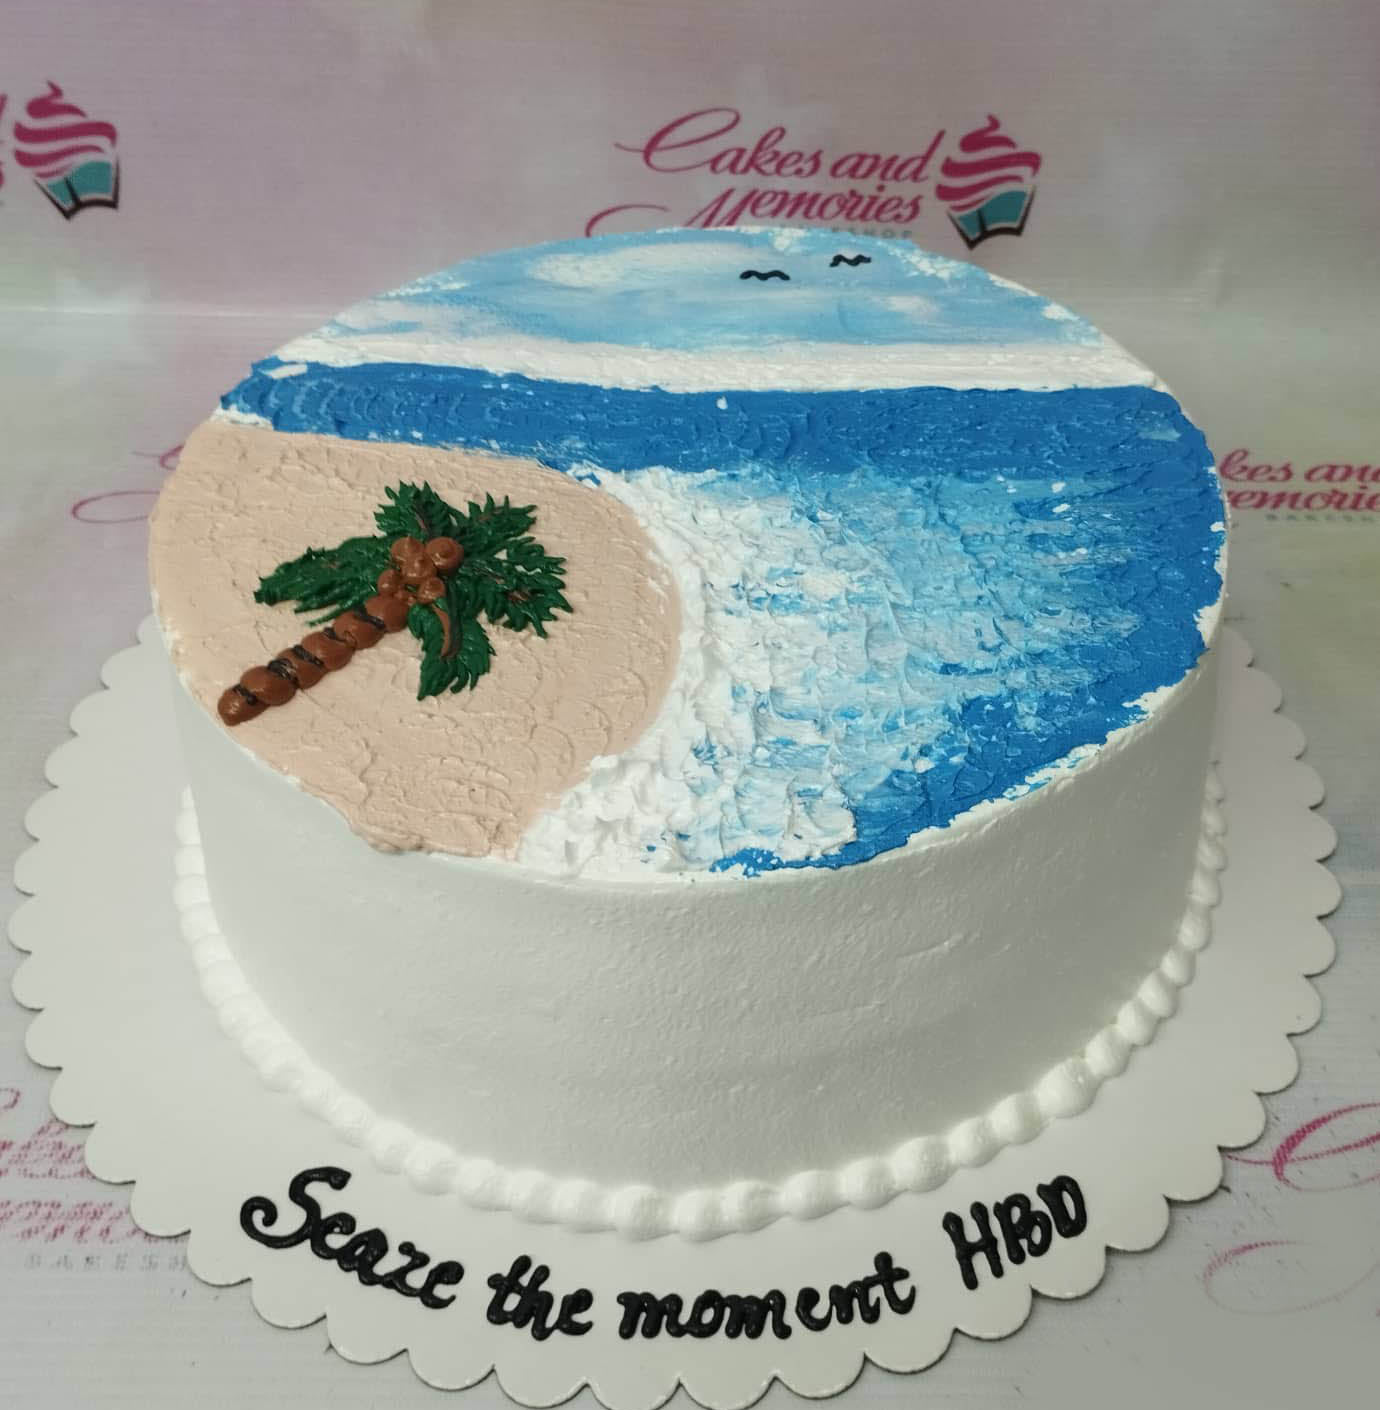 Beach Party Cake